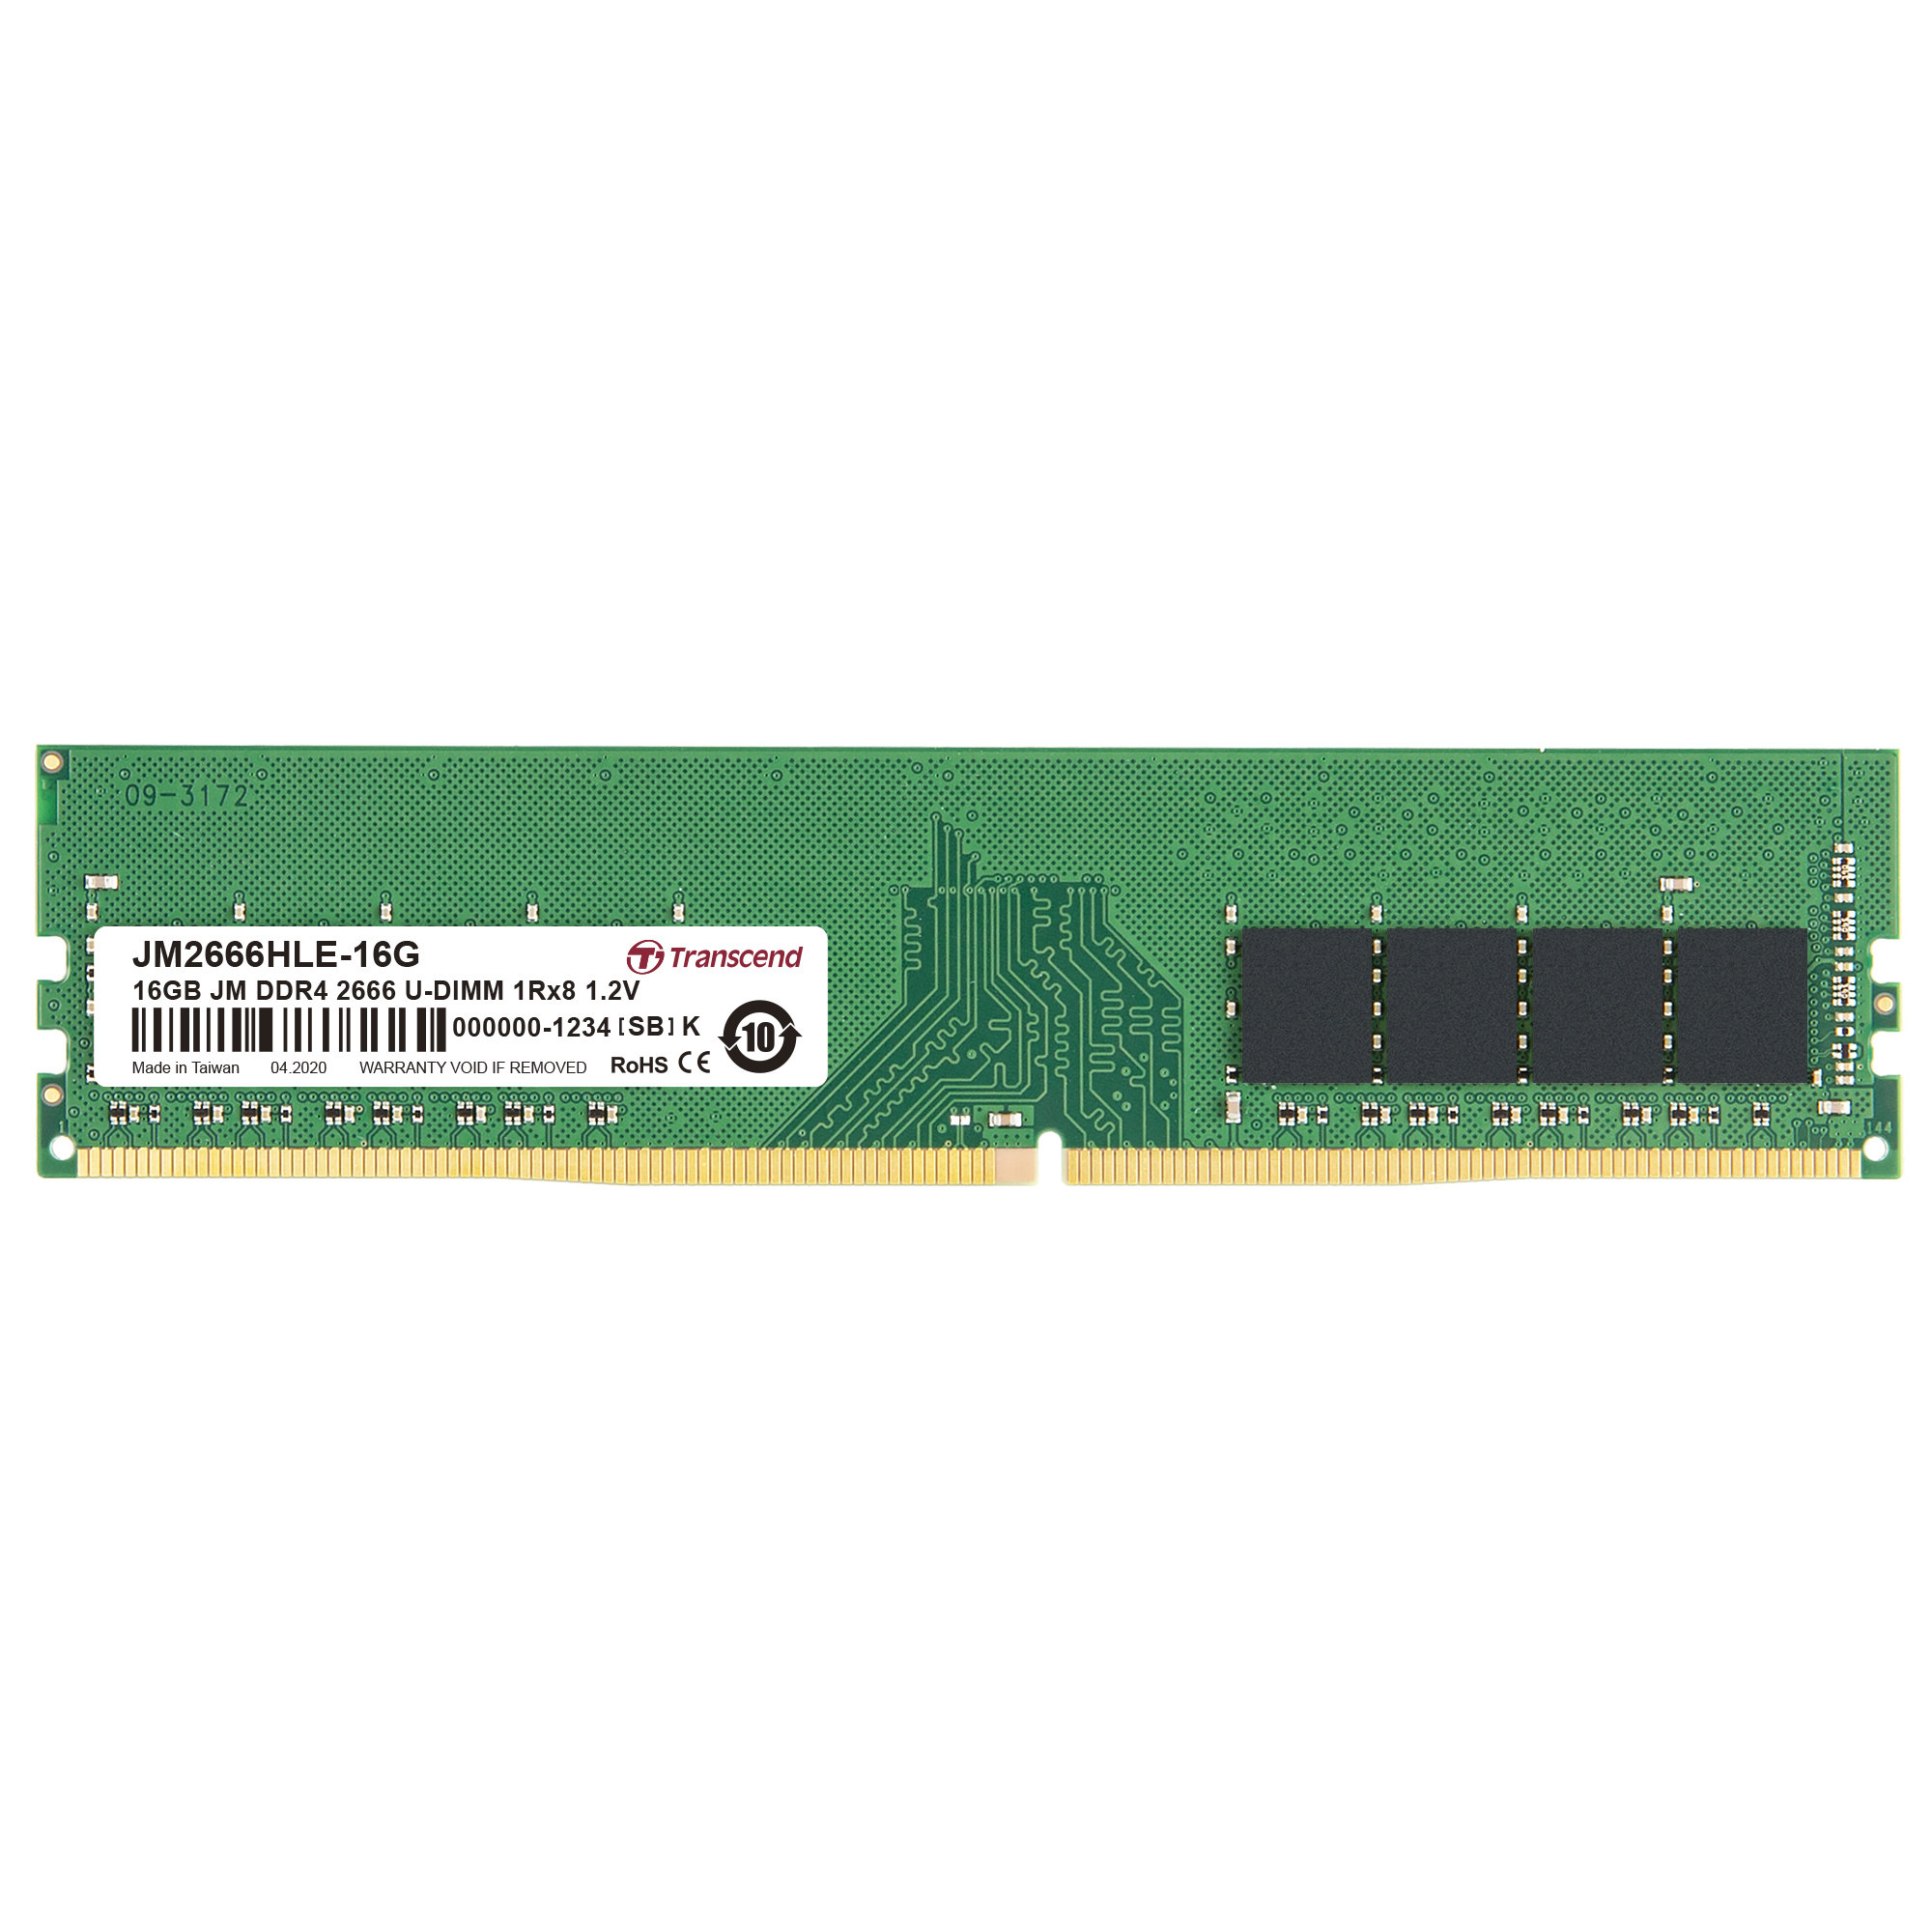 16GB Transcend JetRam DDR4 3200Mhz PC4-25600 Desktop Memory Module 288 Pins